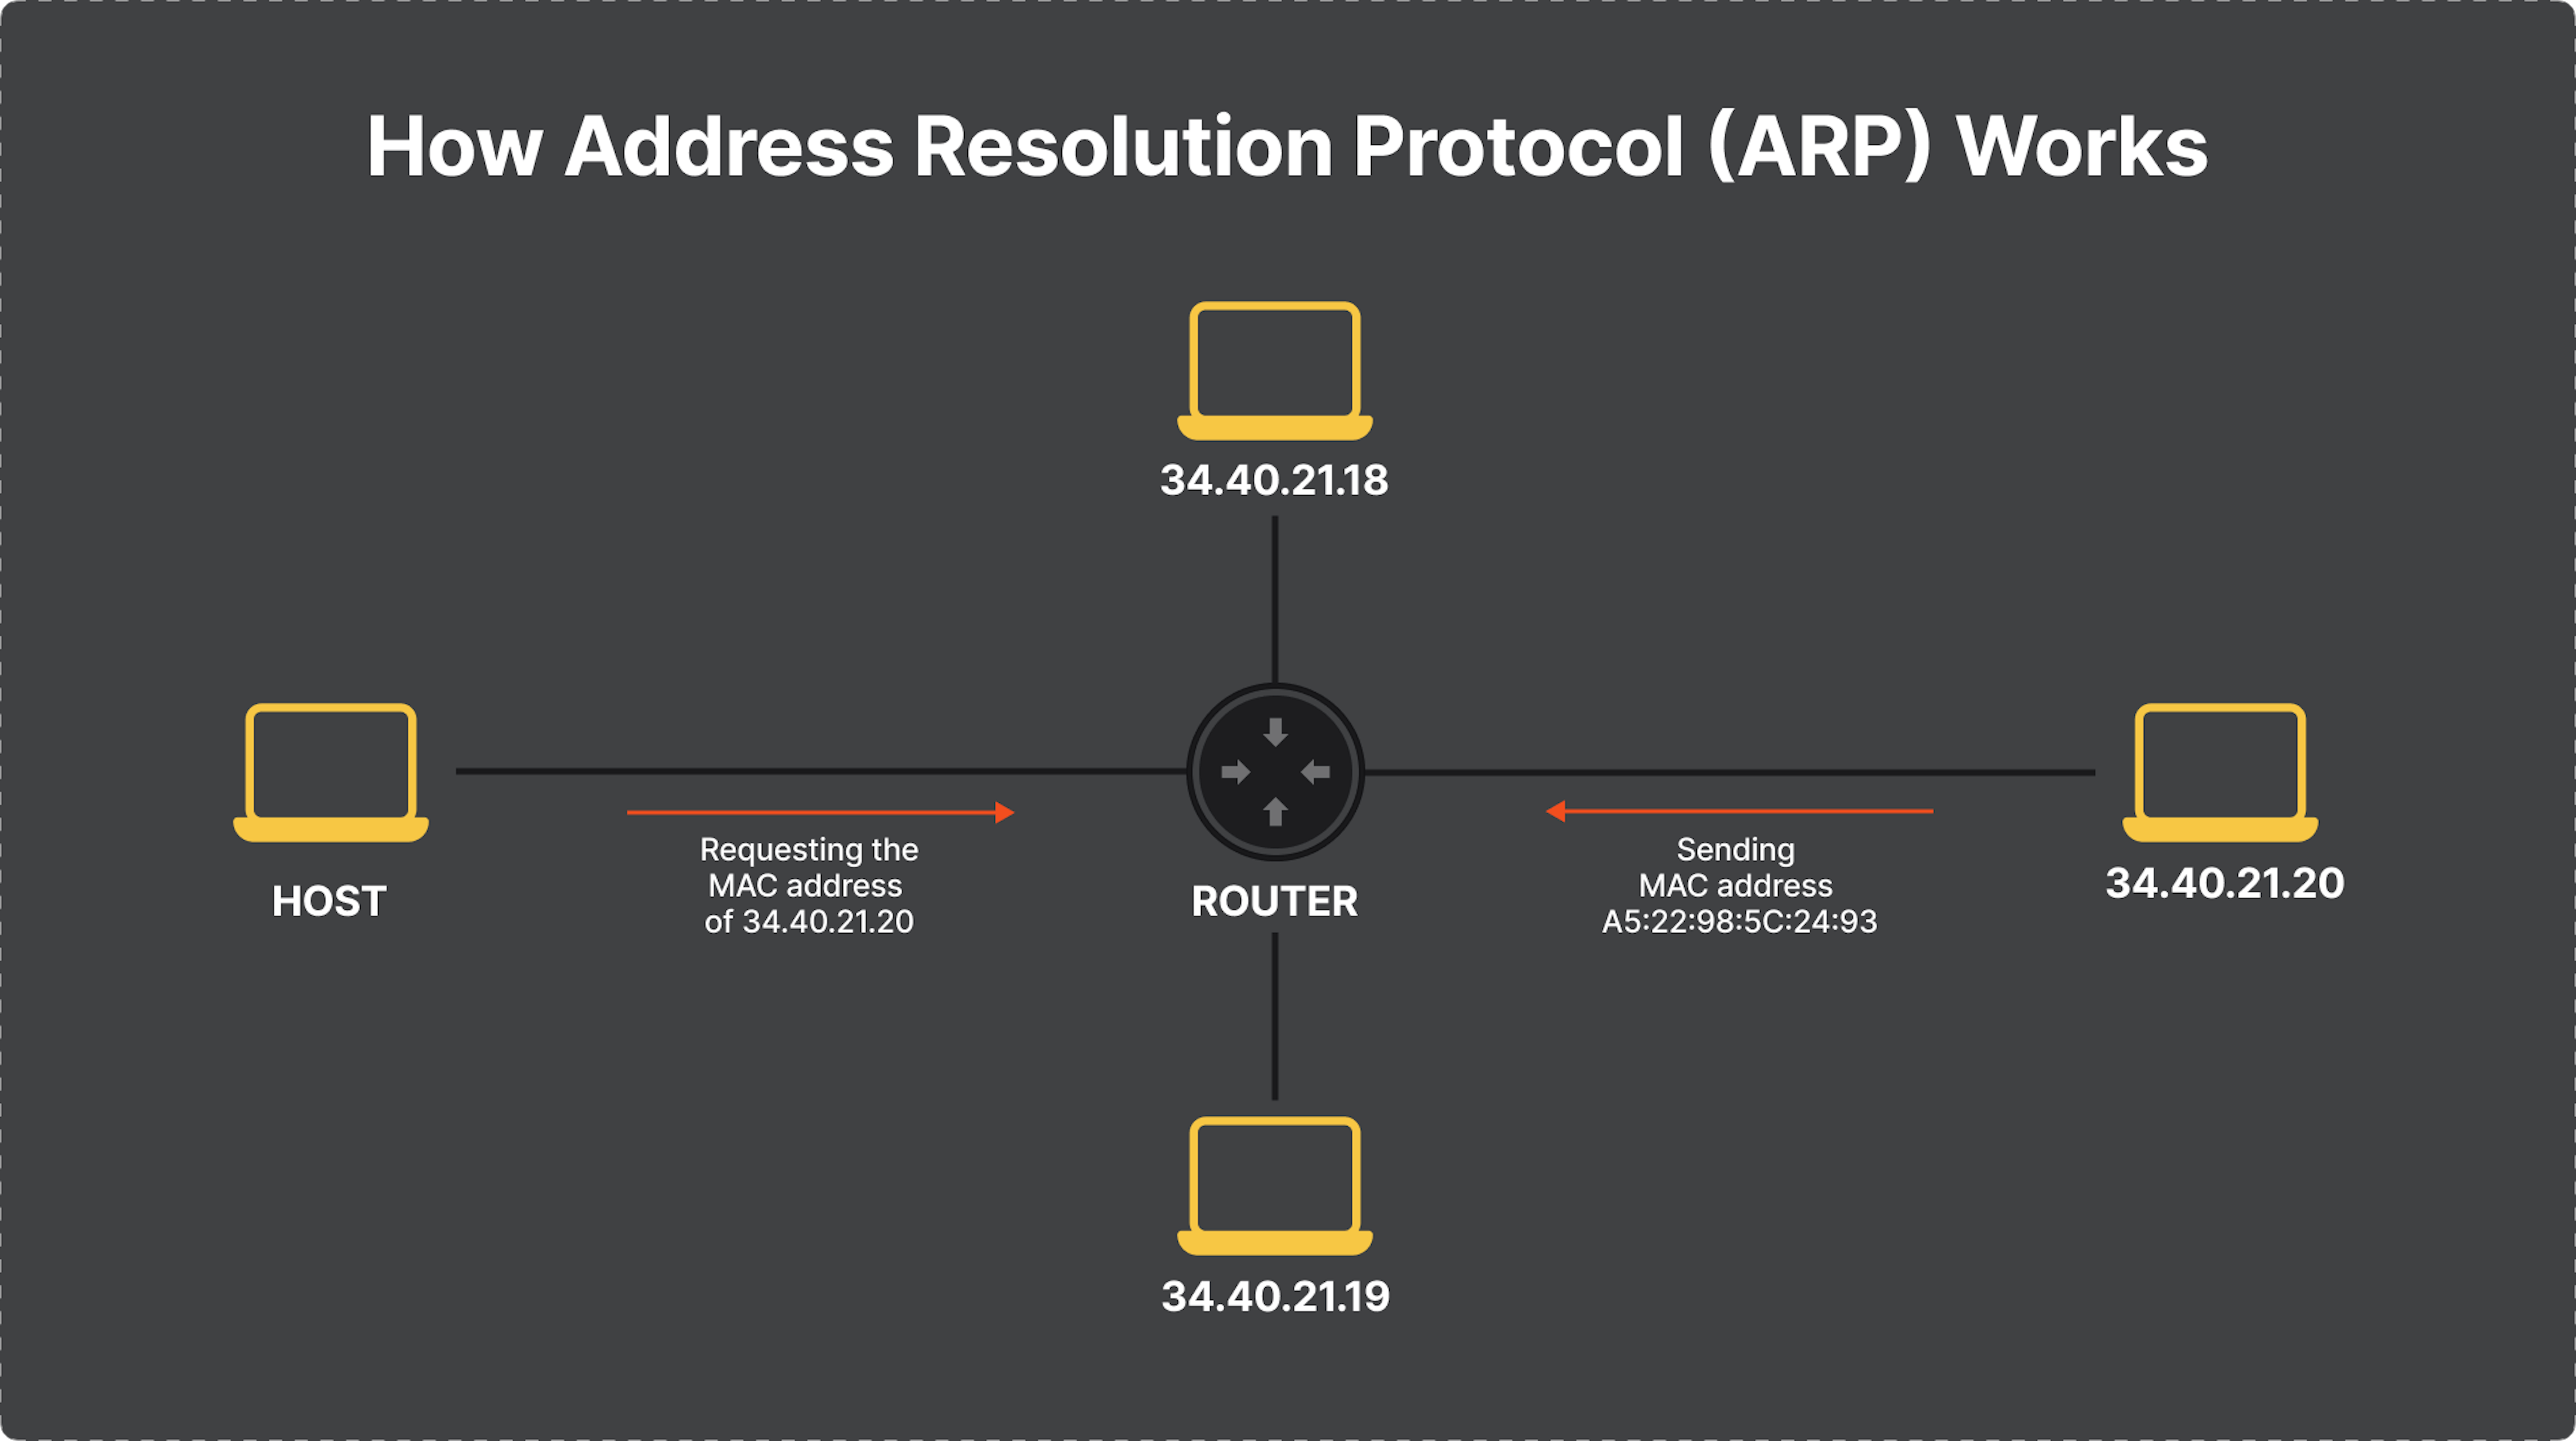 How address resolution protocol works